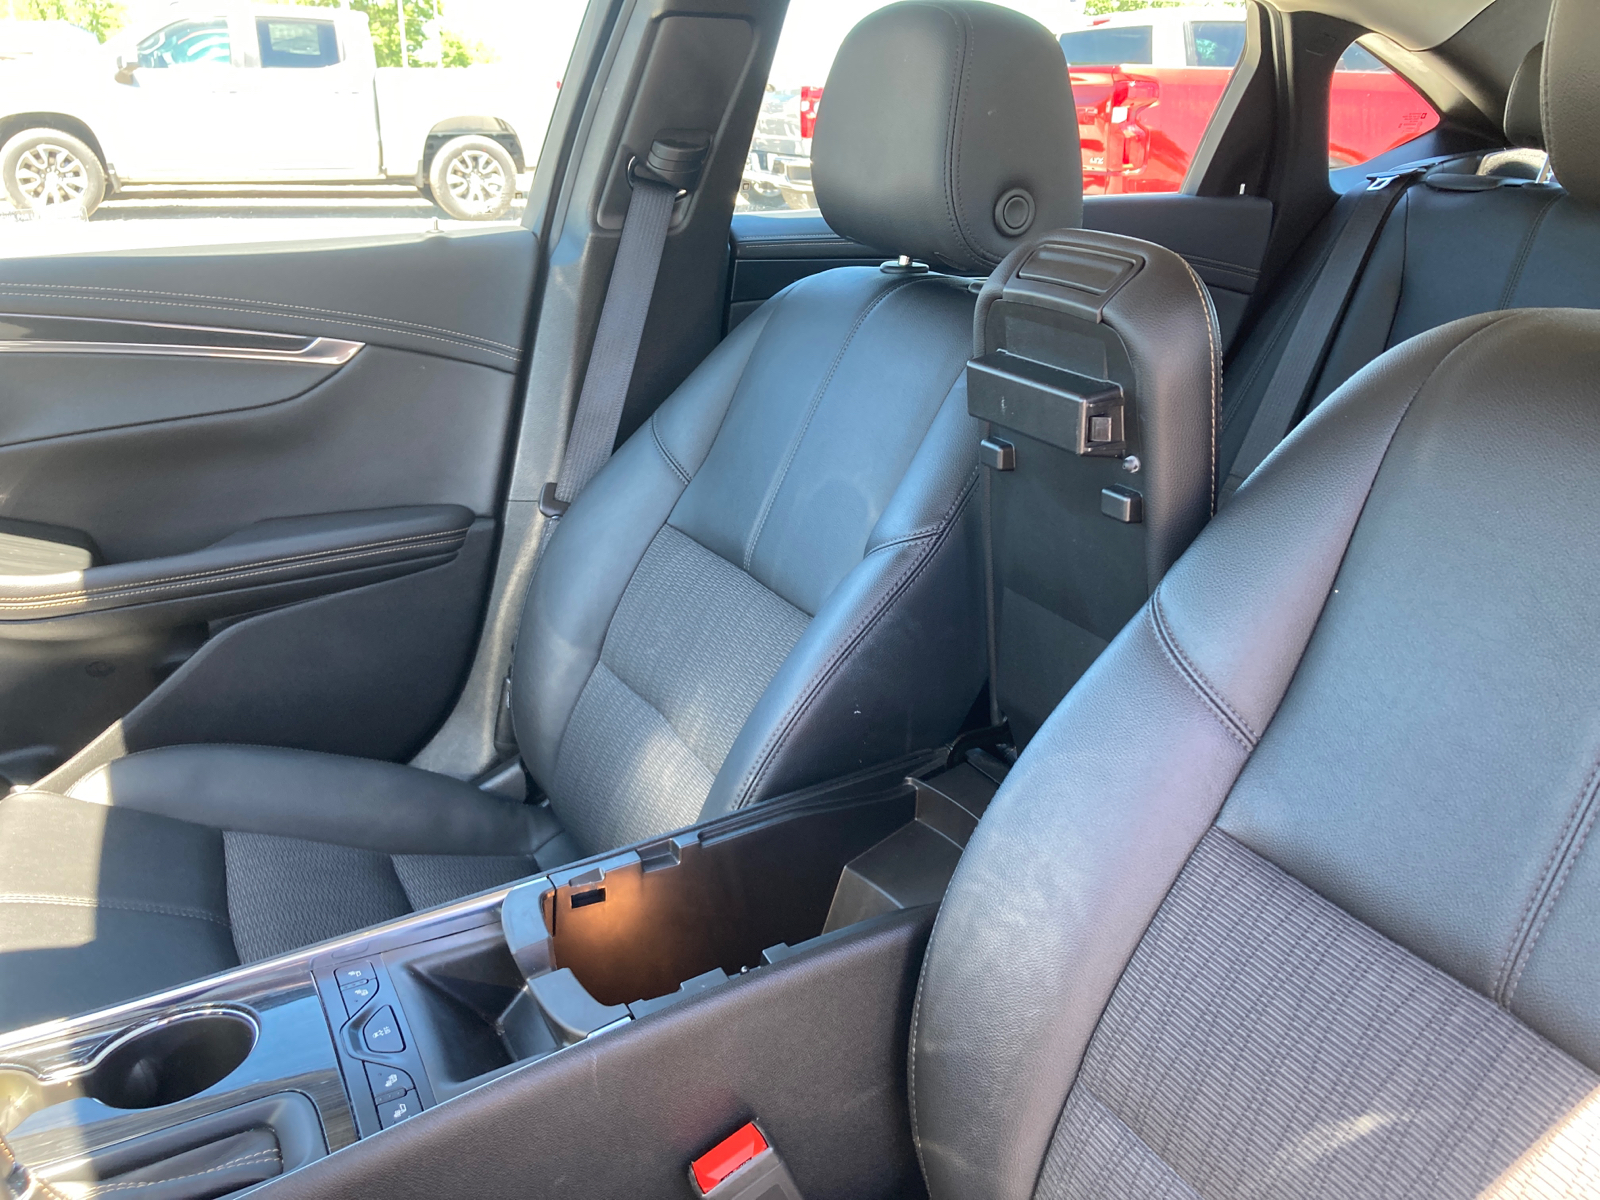 2019 Chevrolet Impala LT 30